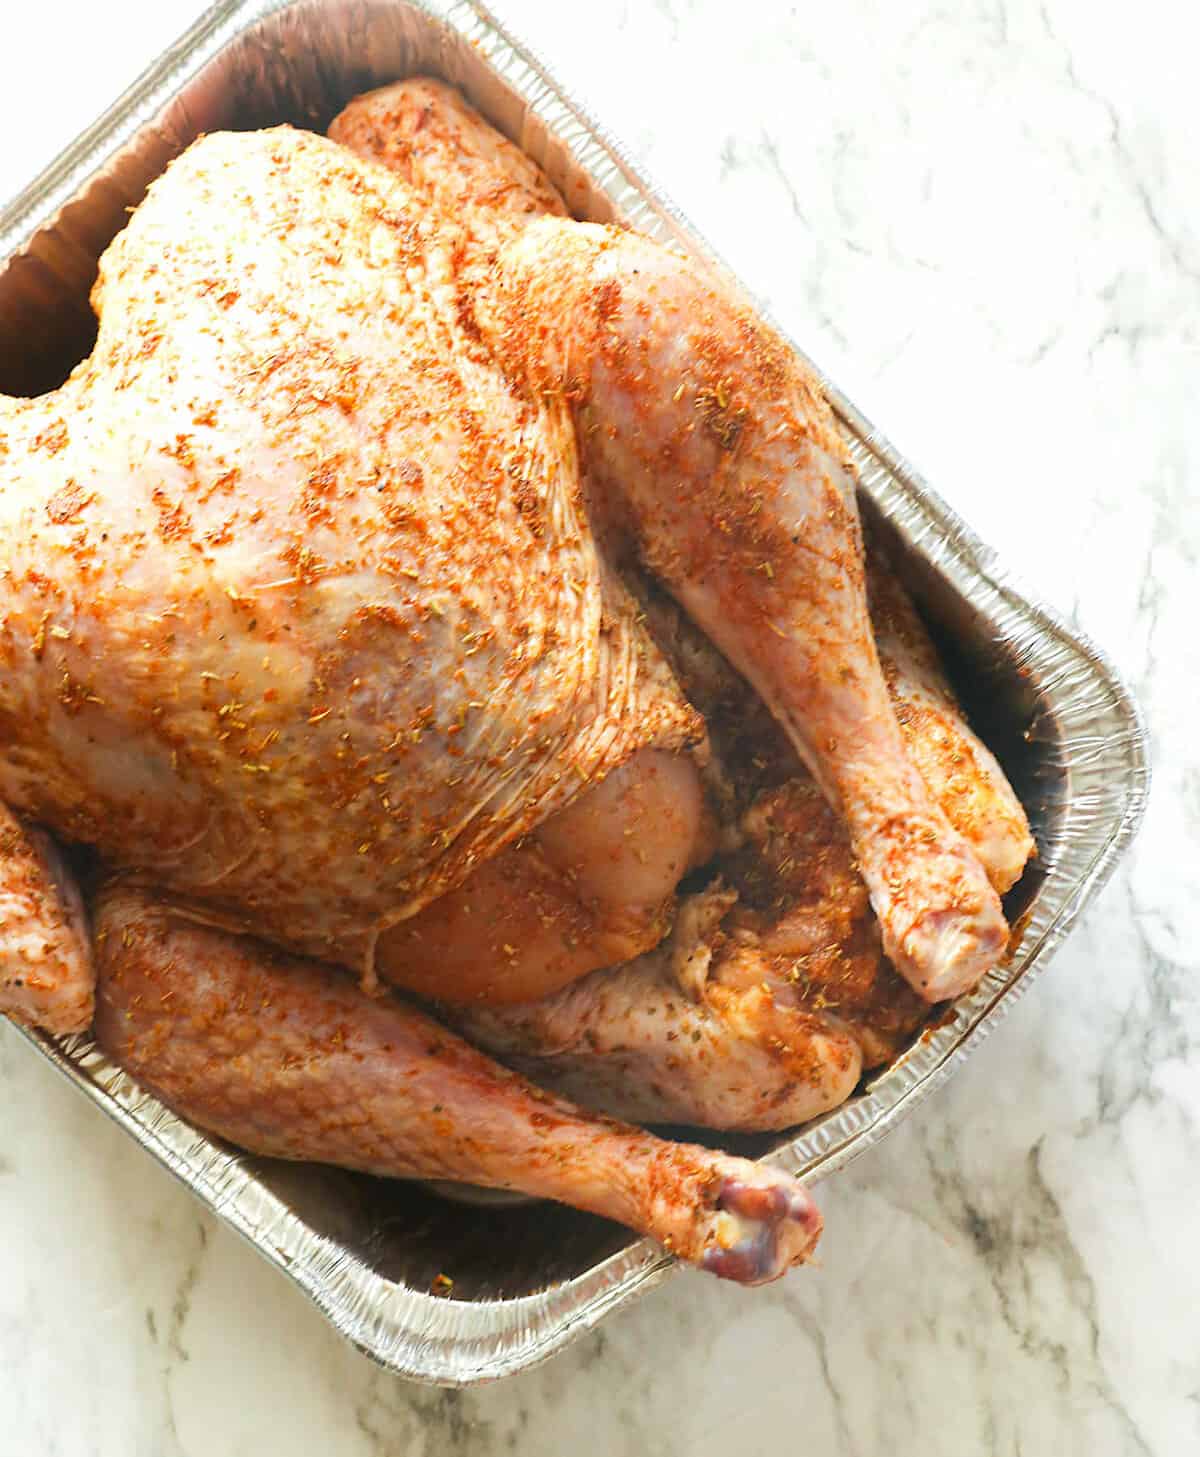 Seasoned turkey ready for the oven